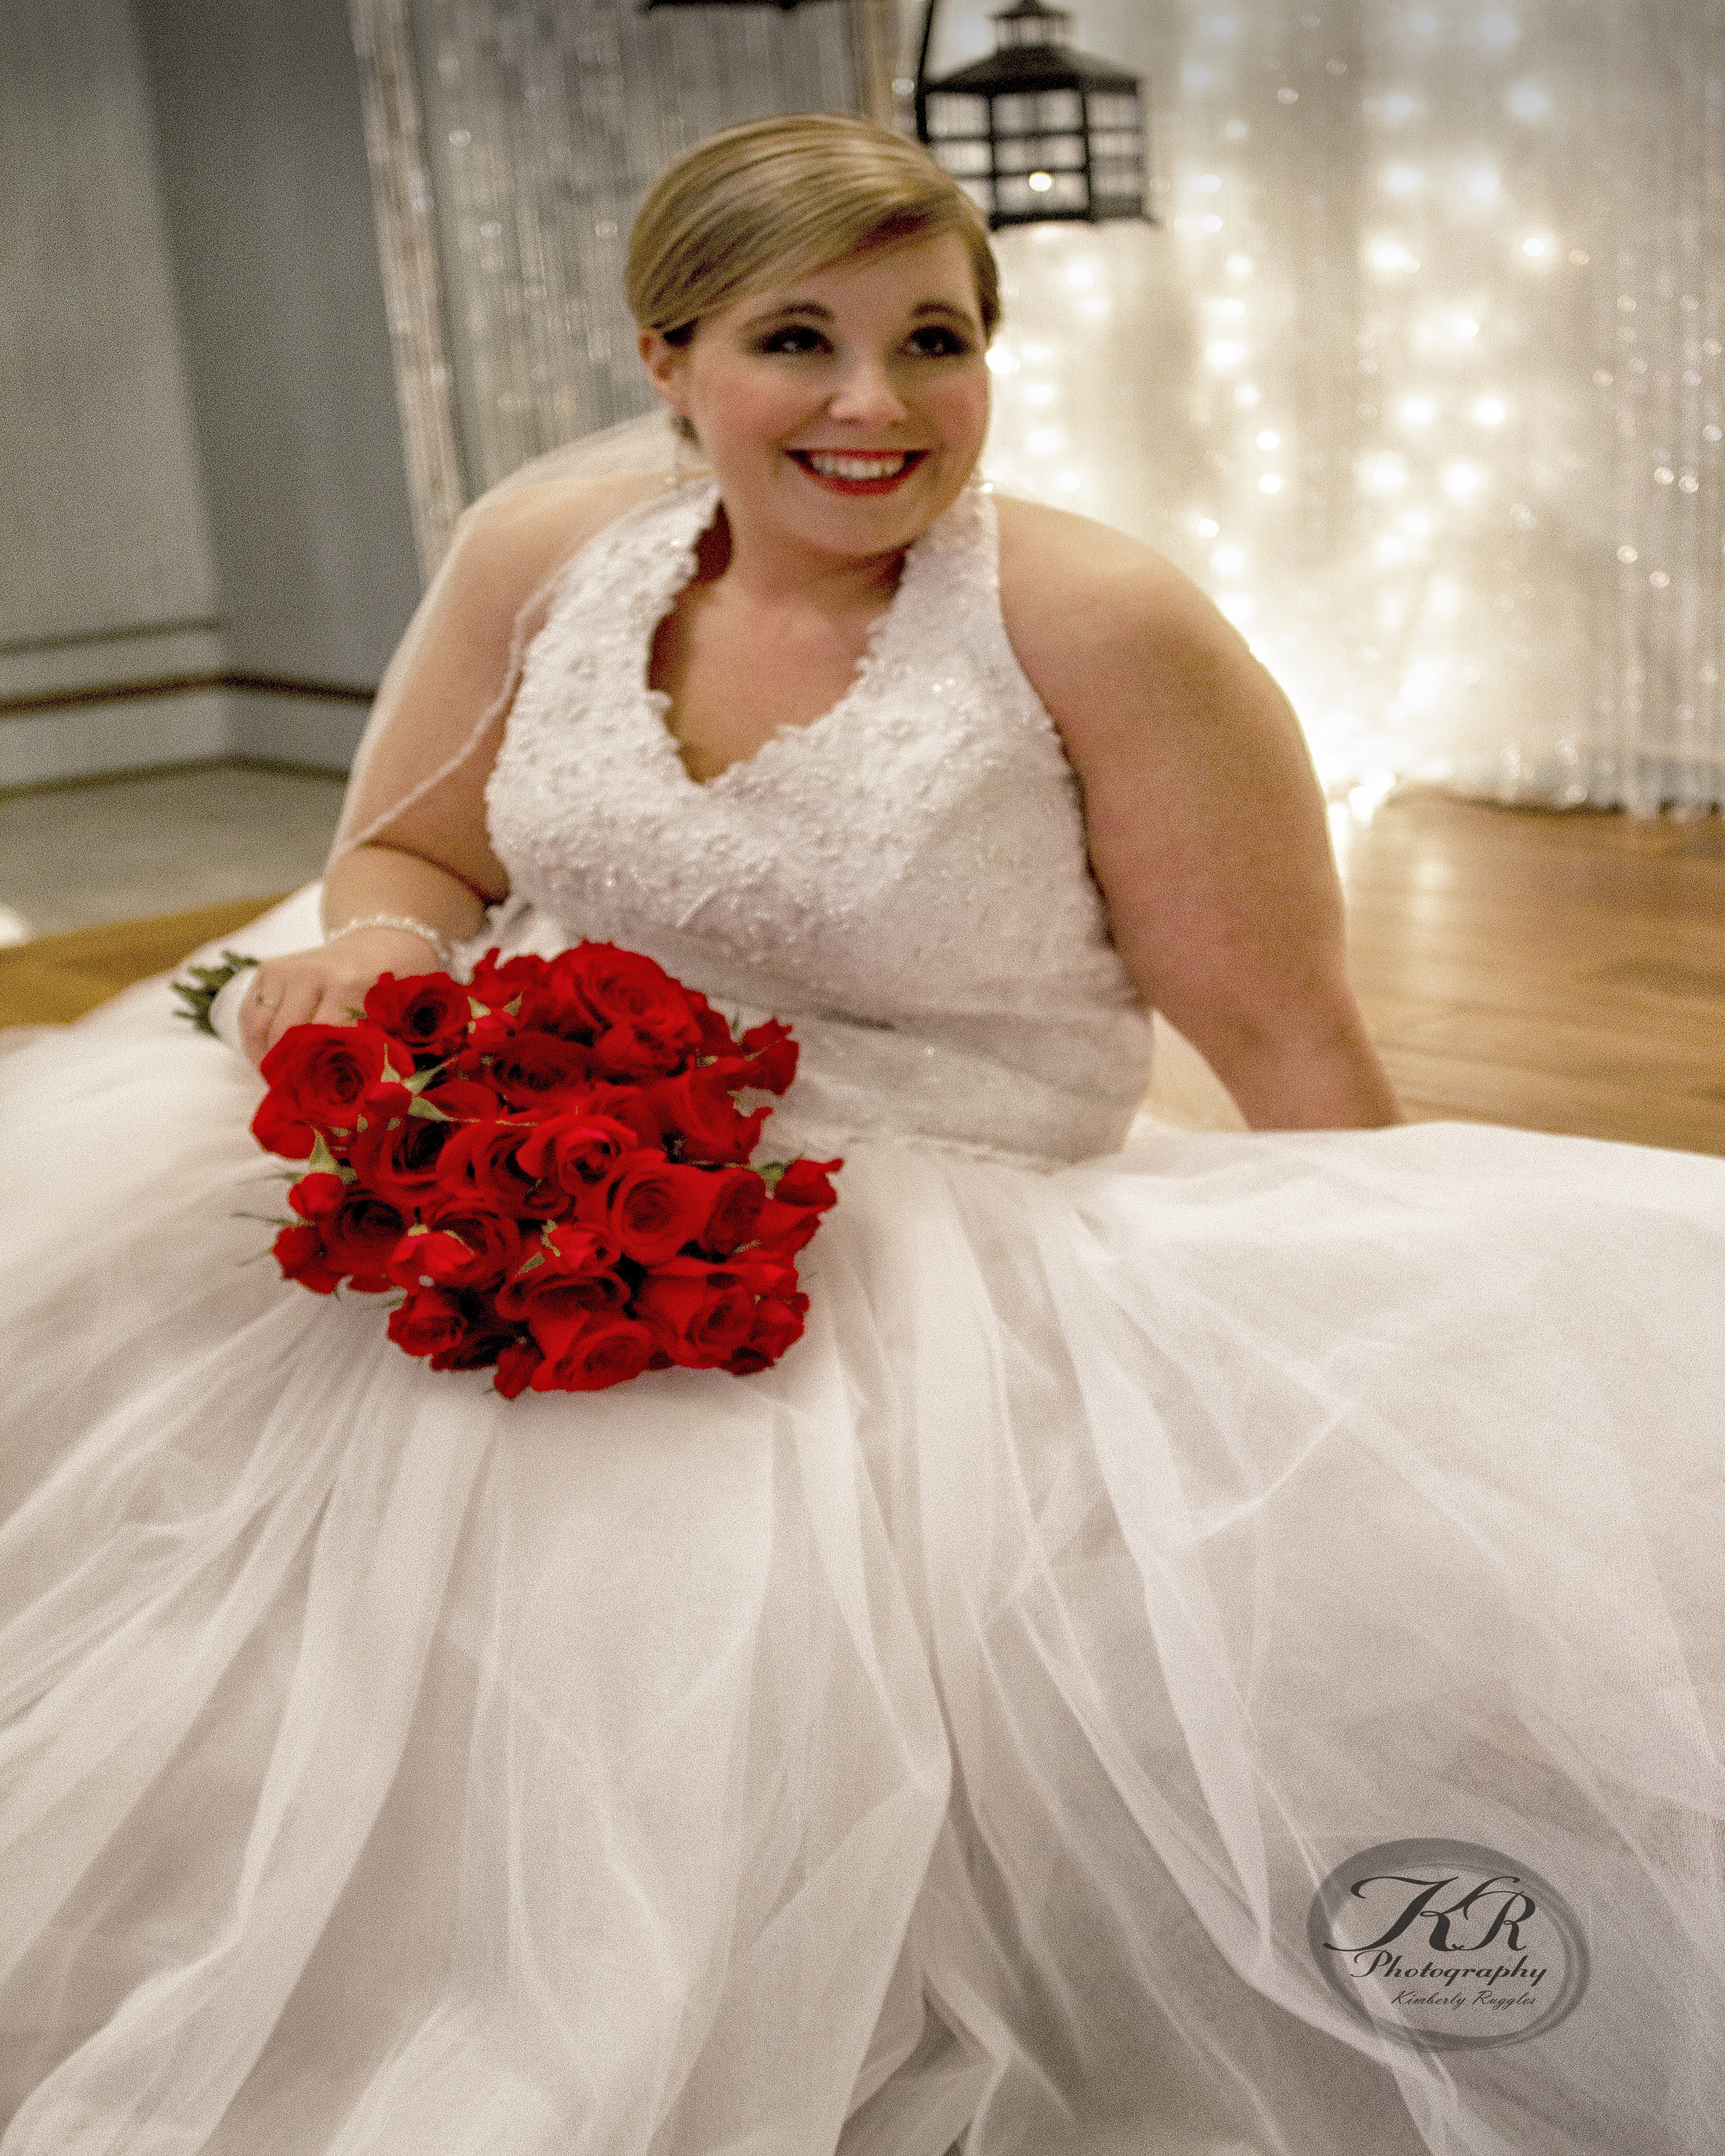 Bride at Trevitt Hall, Daltton, GA. wedding photography by KR photography cartersville, ga